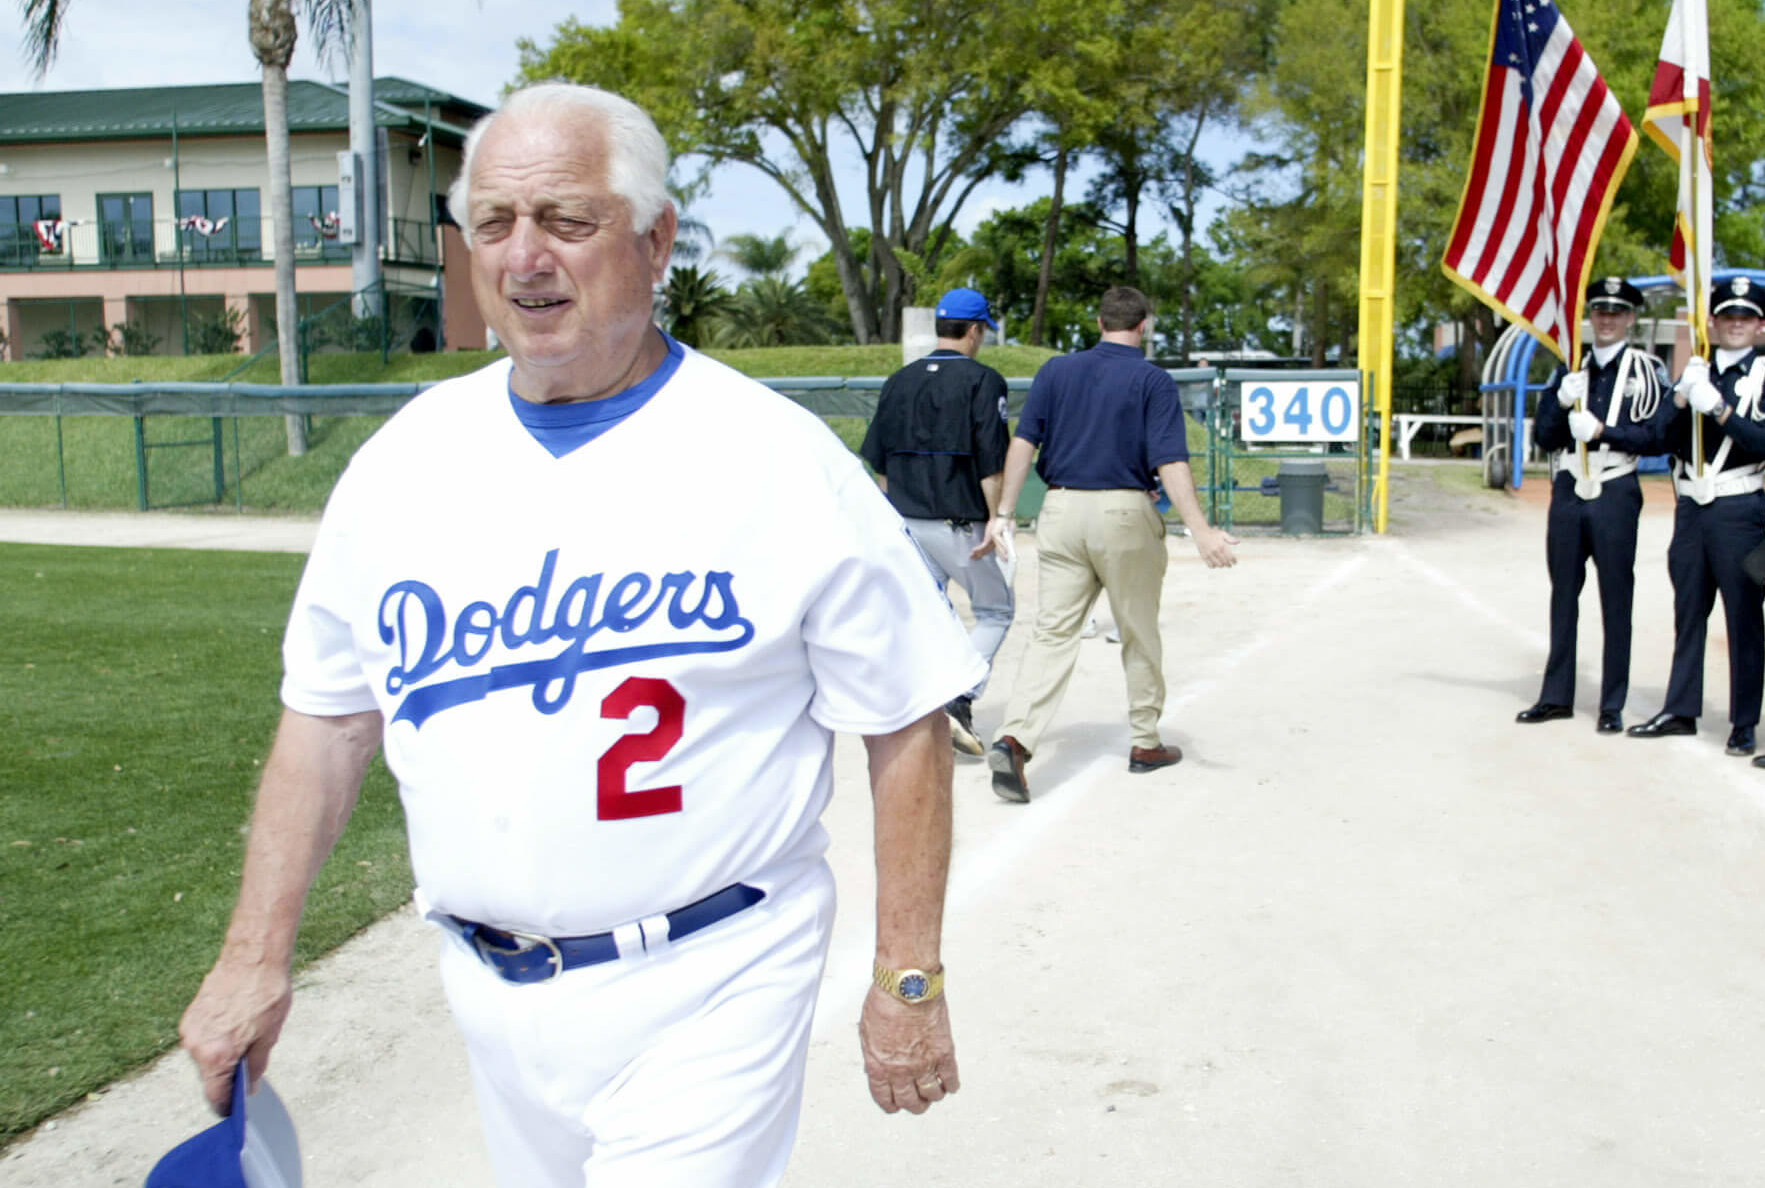 Norristown Native Tommy Lasorda, Baseball Legend, Dies At 93